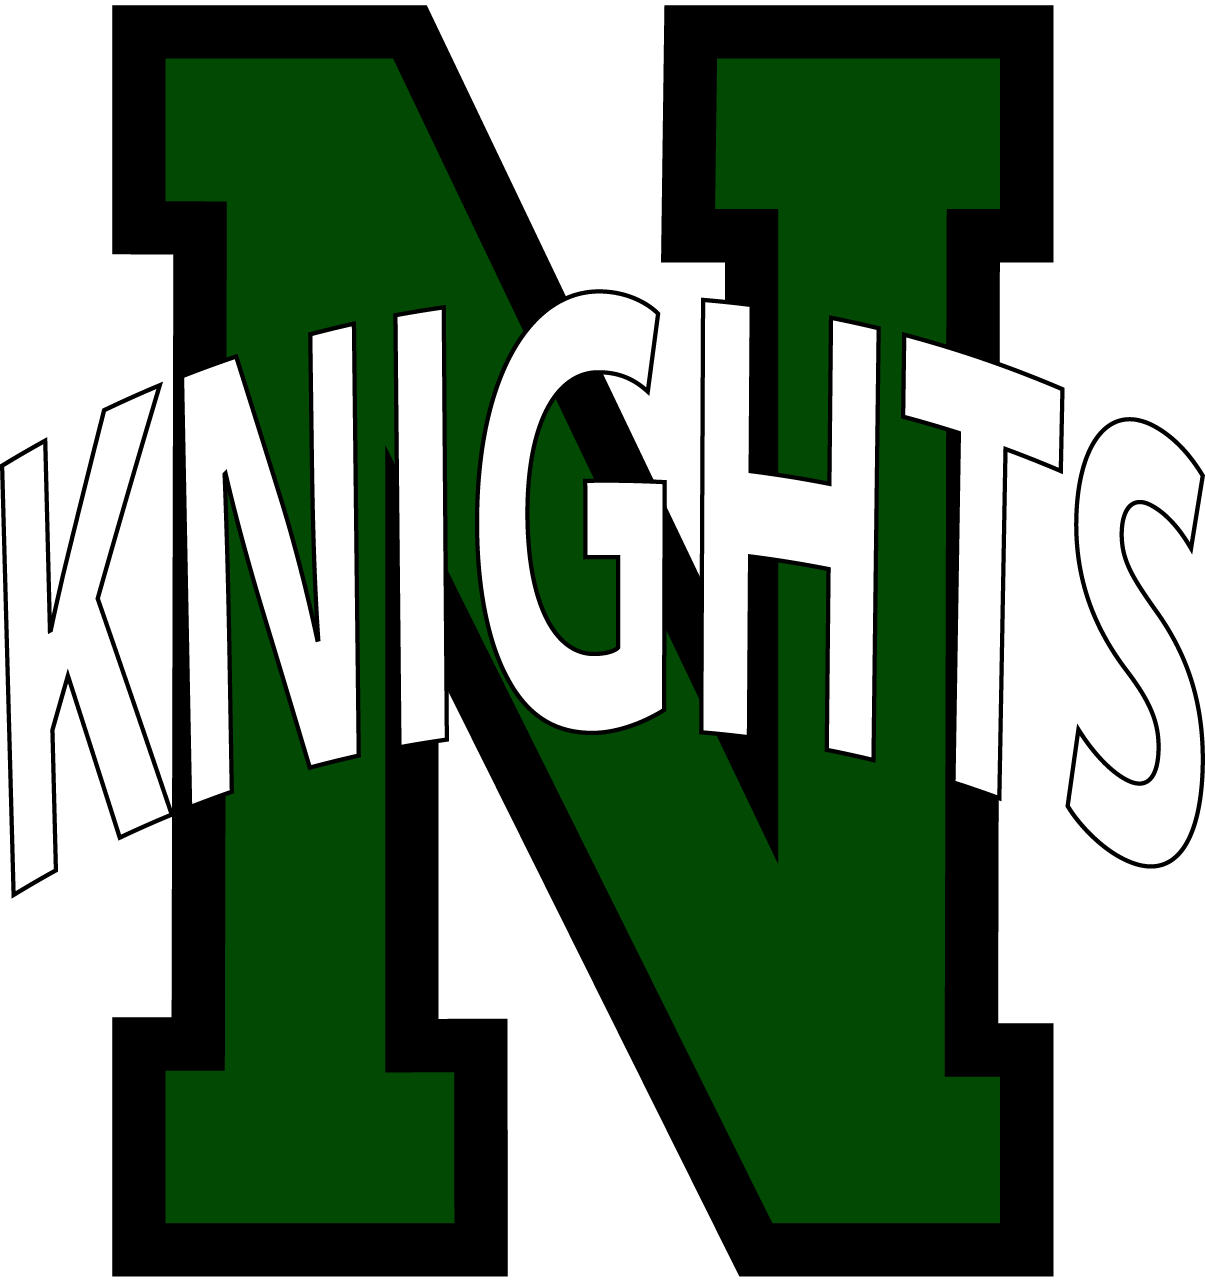 Tickets - Nordonia Knights Logo (1205x1282)